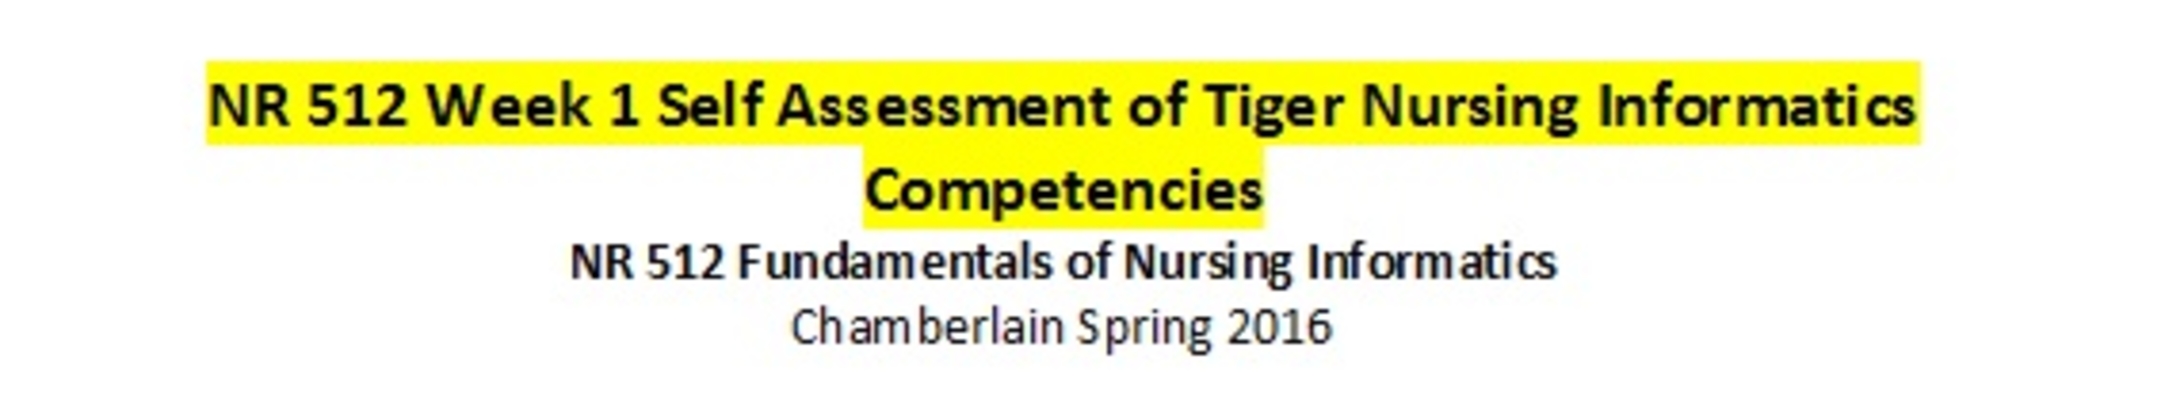 NR 512 Week 1 Self Assessment of Tiger Nursing Informatics Competencies 